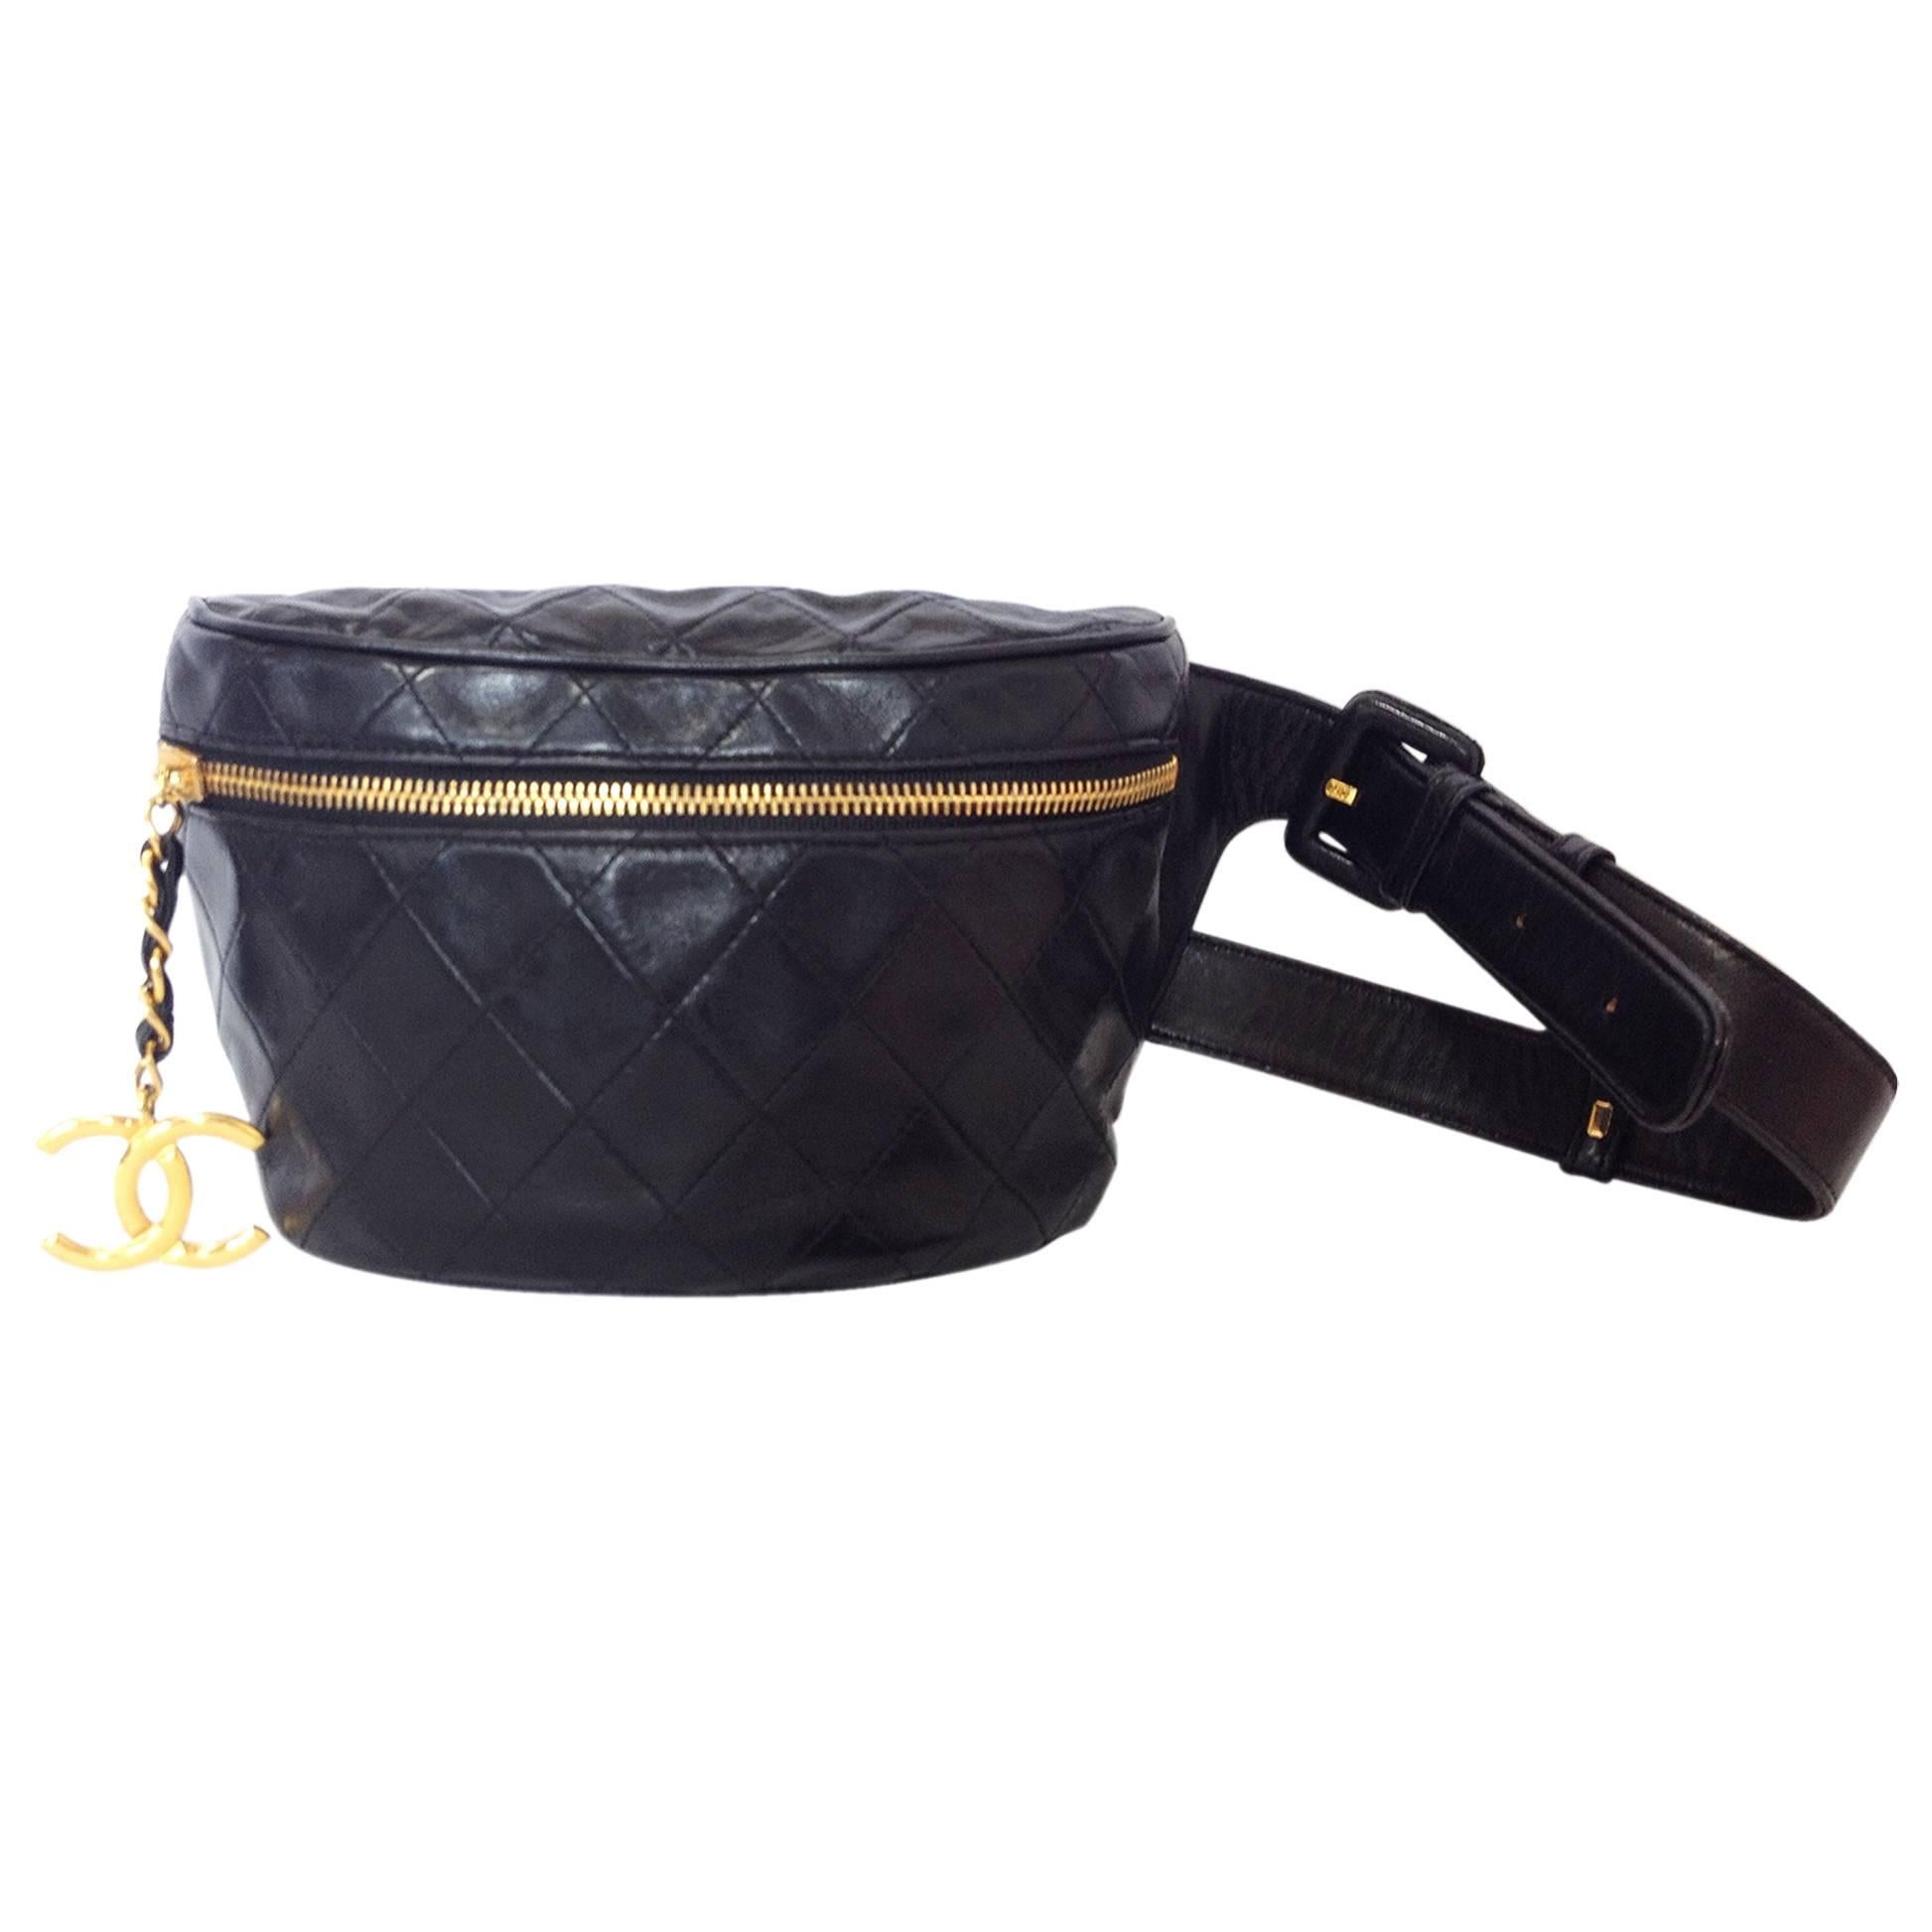 1980s Vintage CHANEL black leather waist bag, fanny pack with a detachable belt 